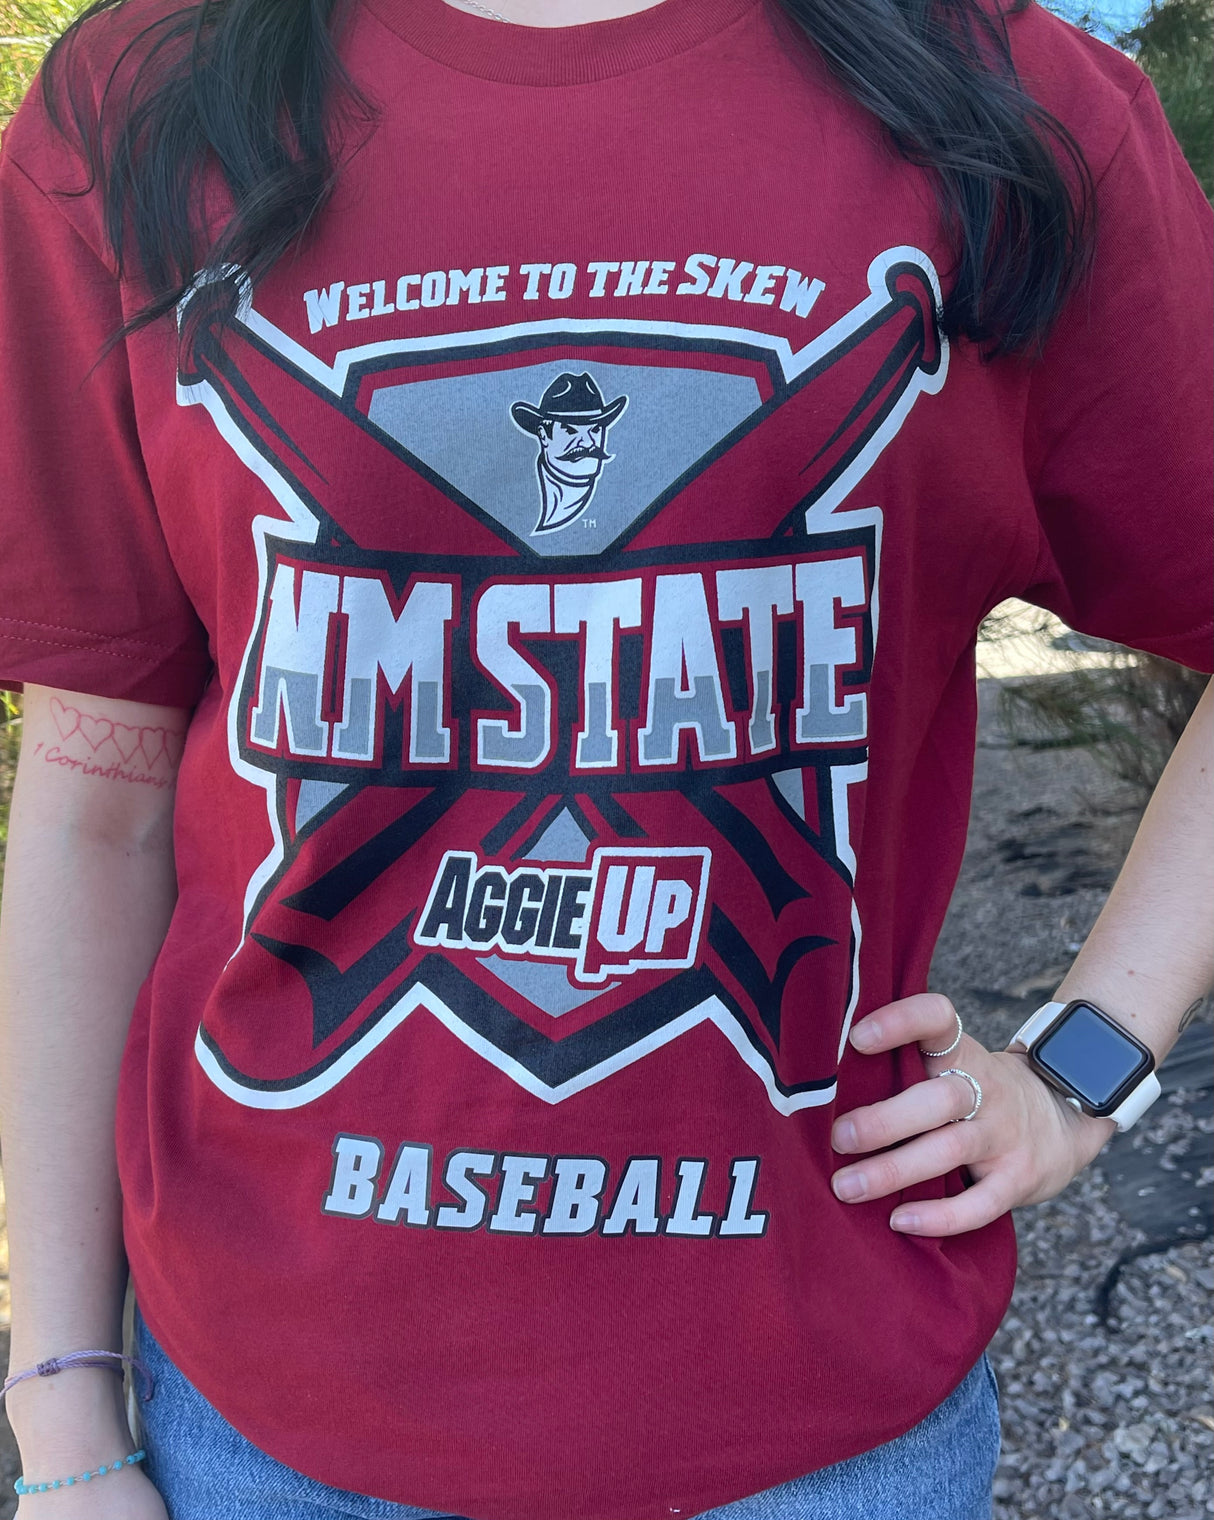 Aggie Up NM State Baseball Tee